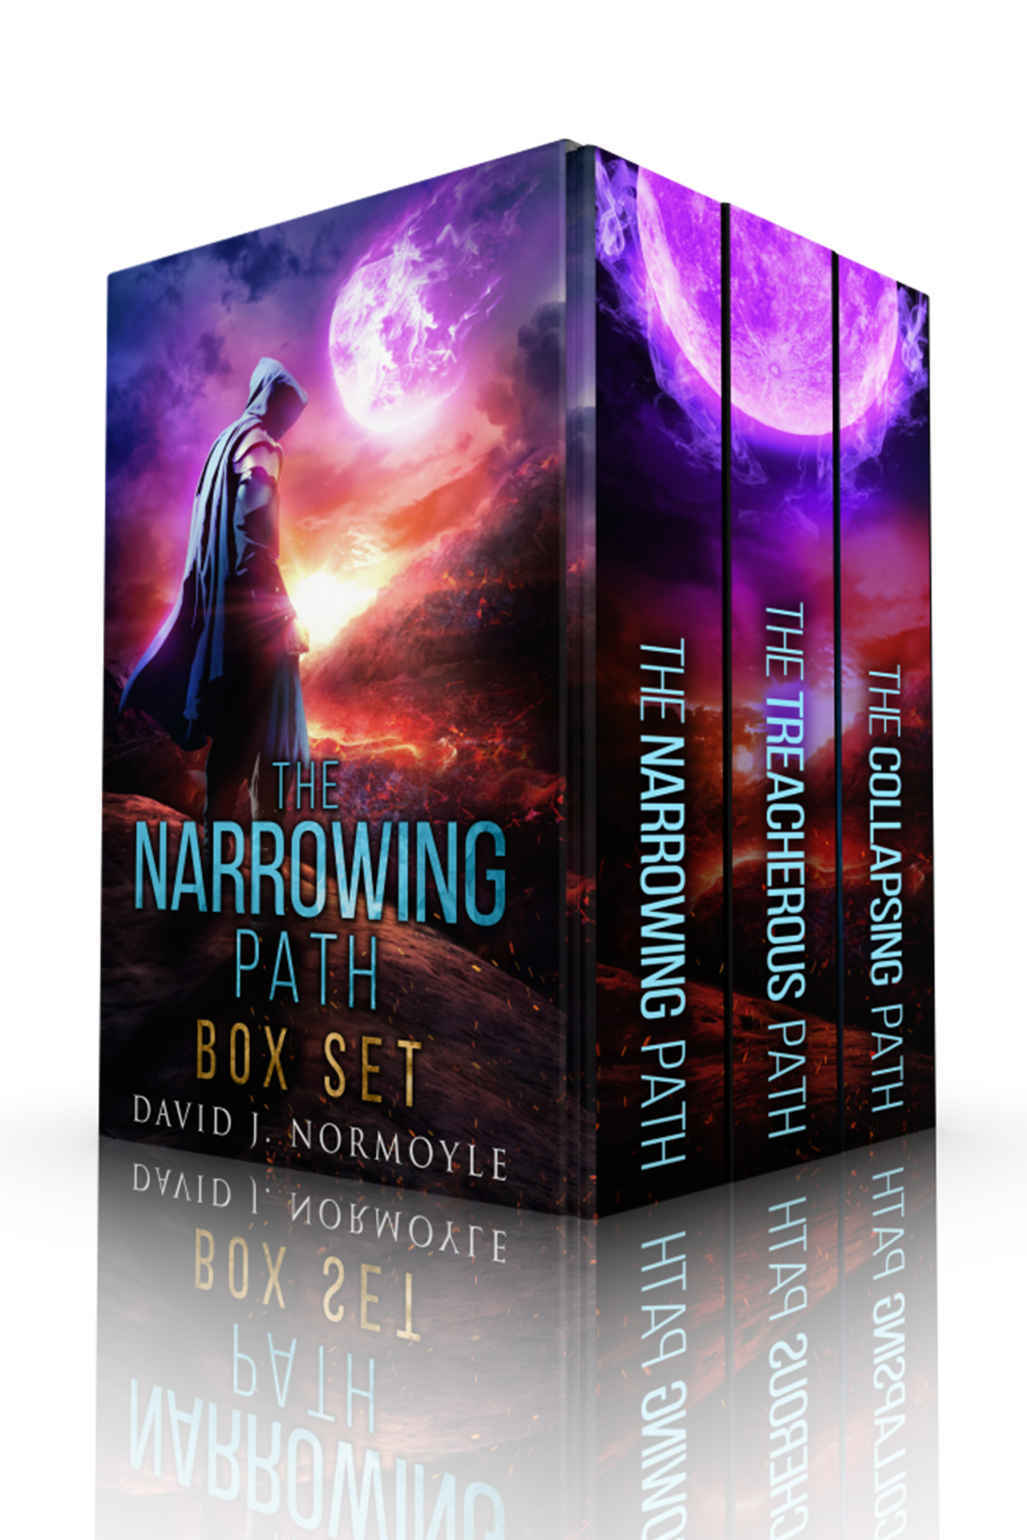 The Narrowing Path Box Set